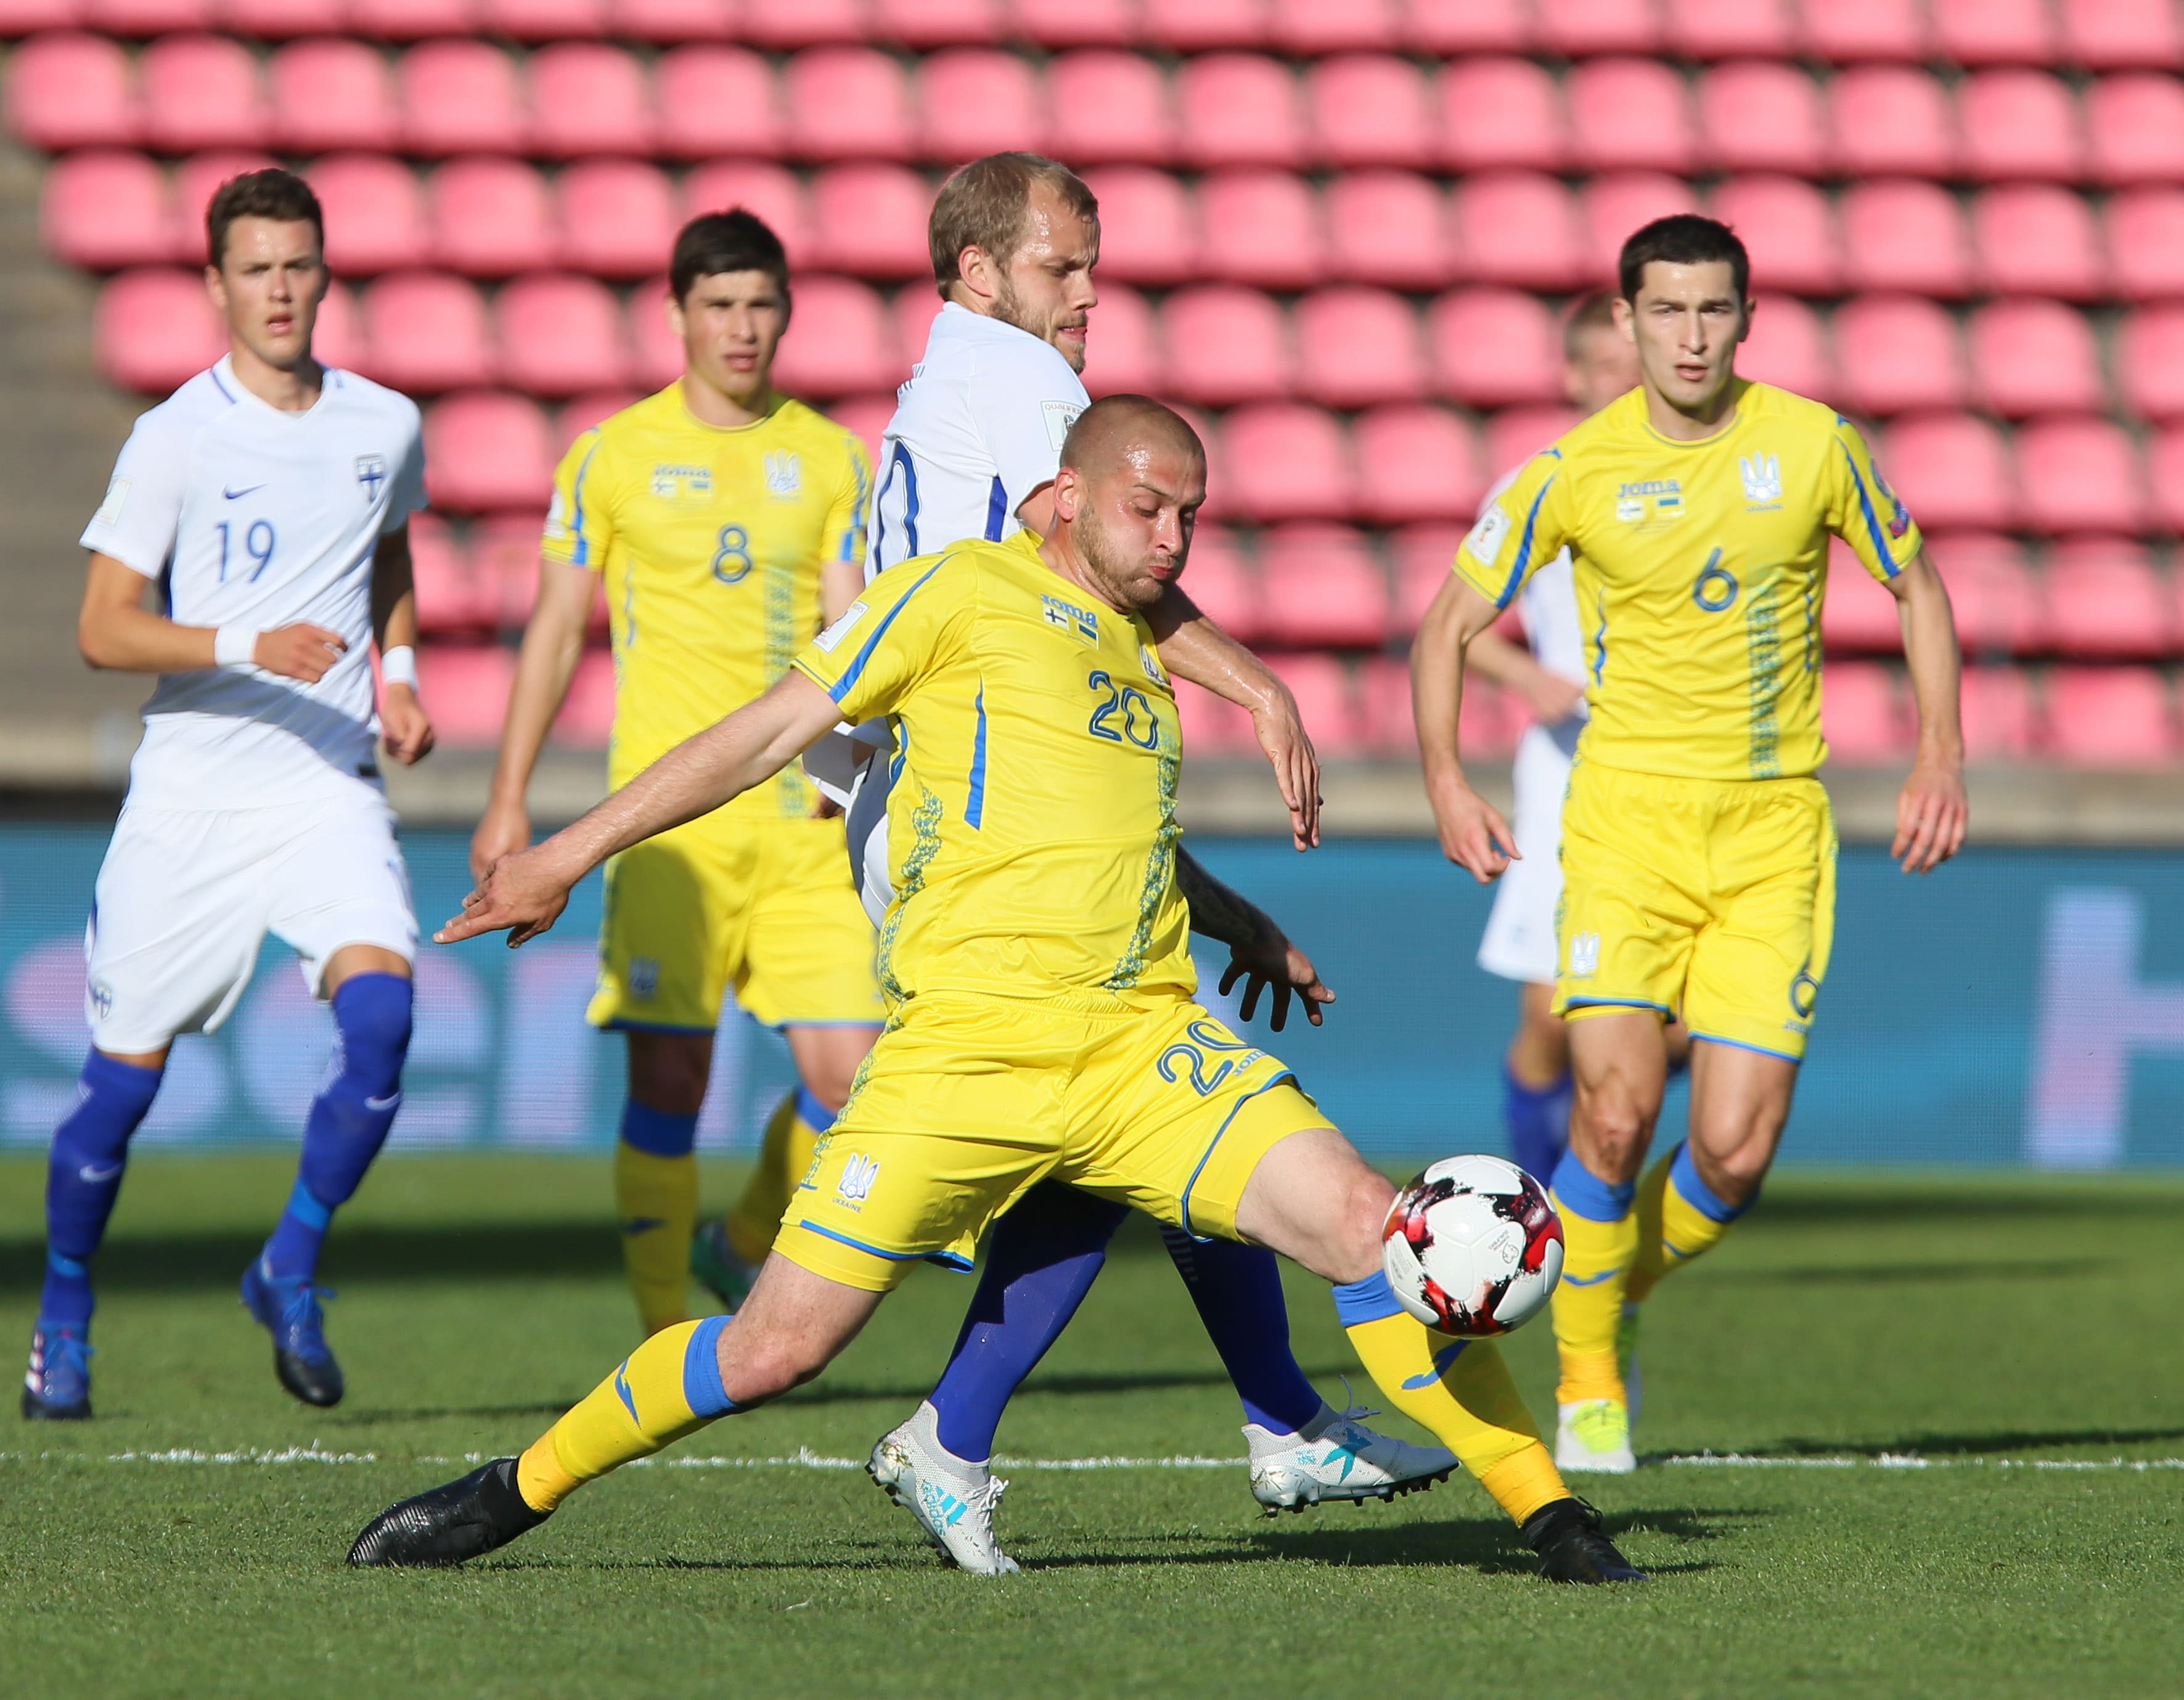 2018 World Cup selection. Finland - Ukraine - 1: 2